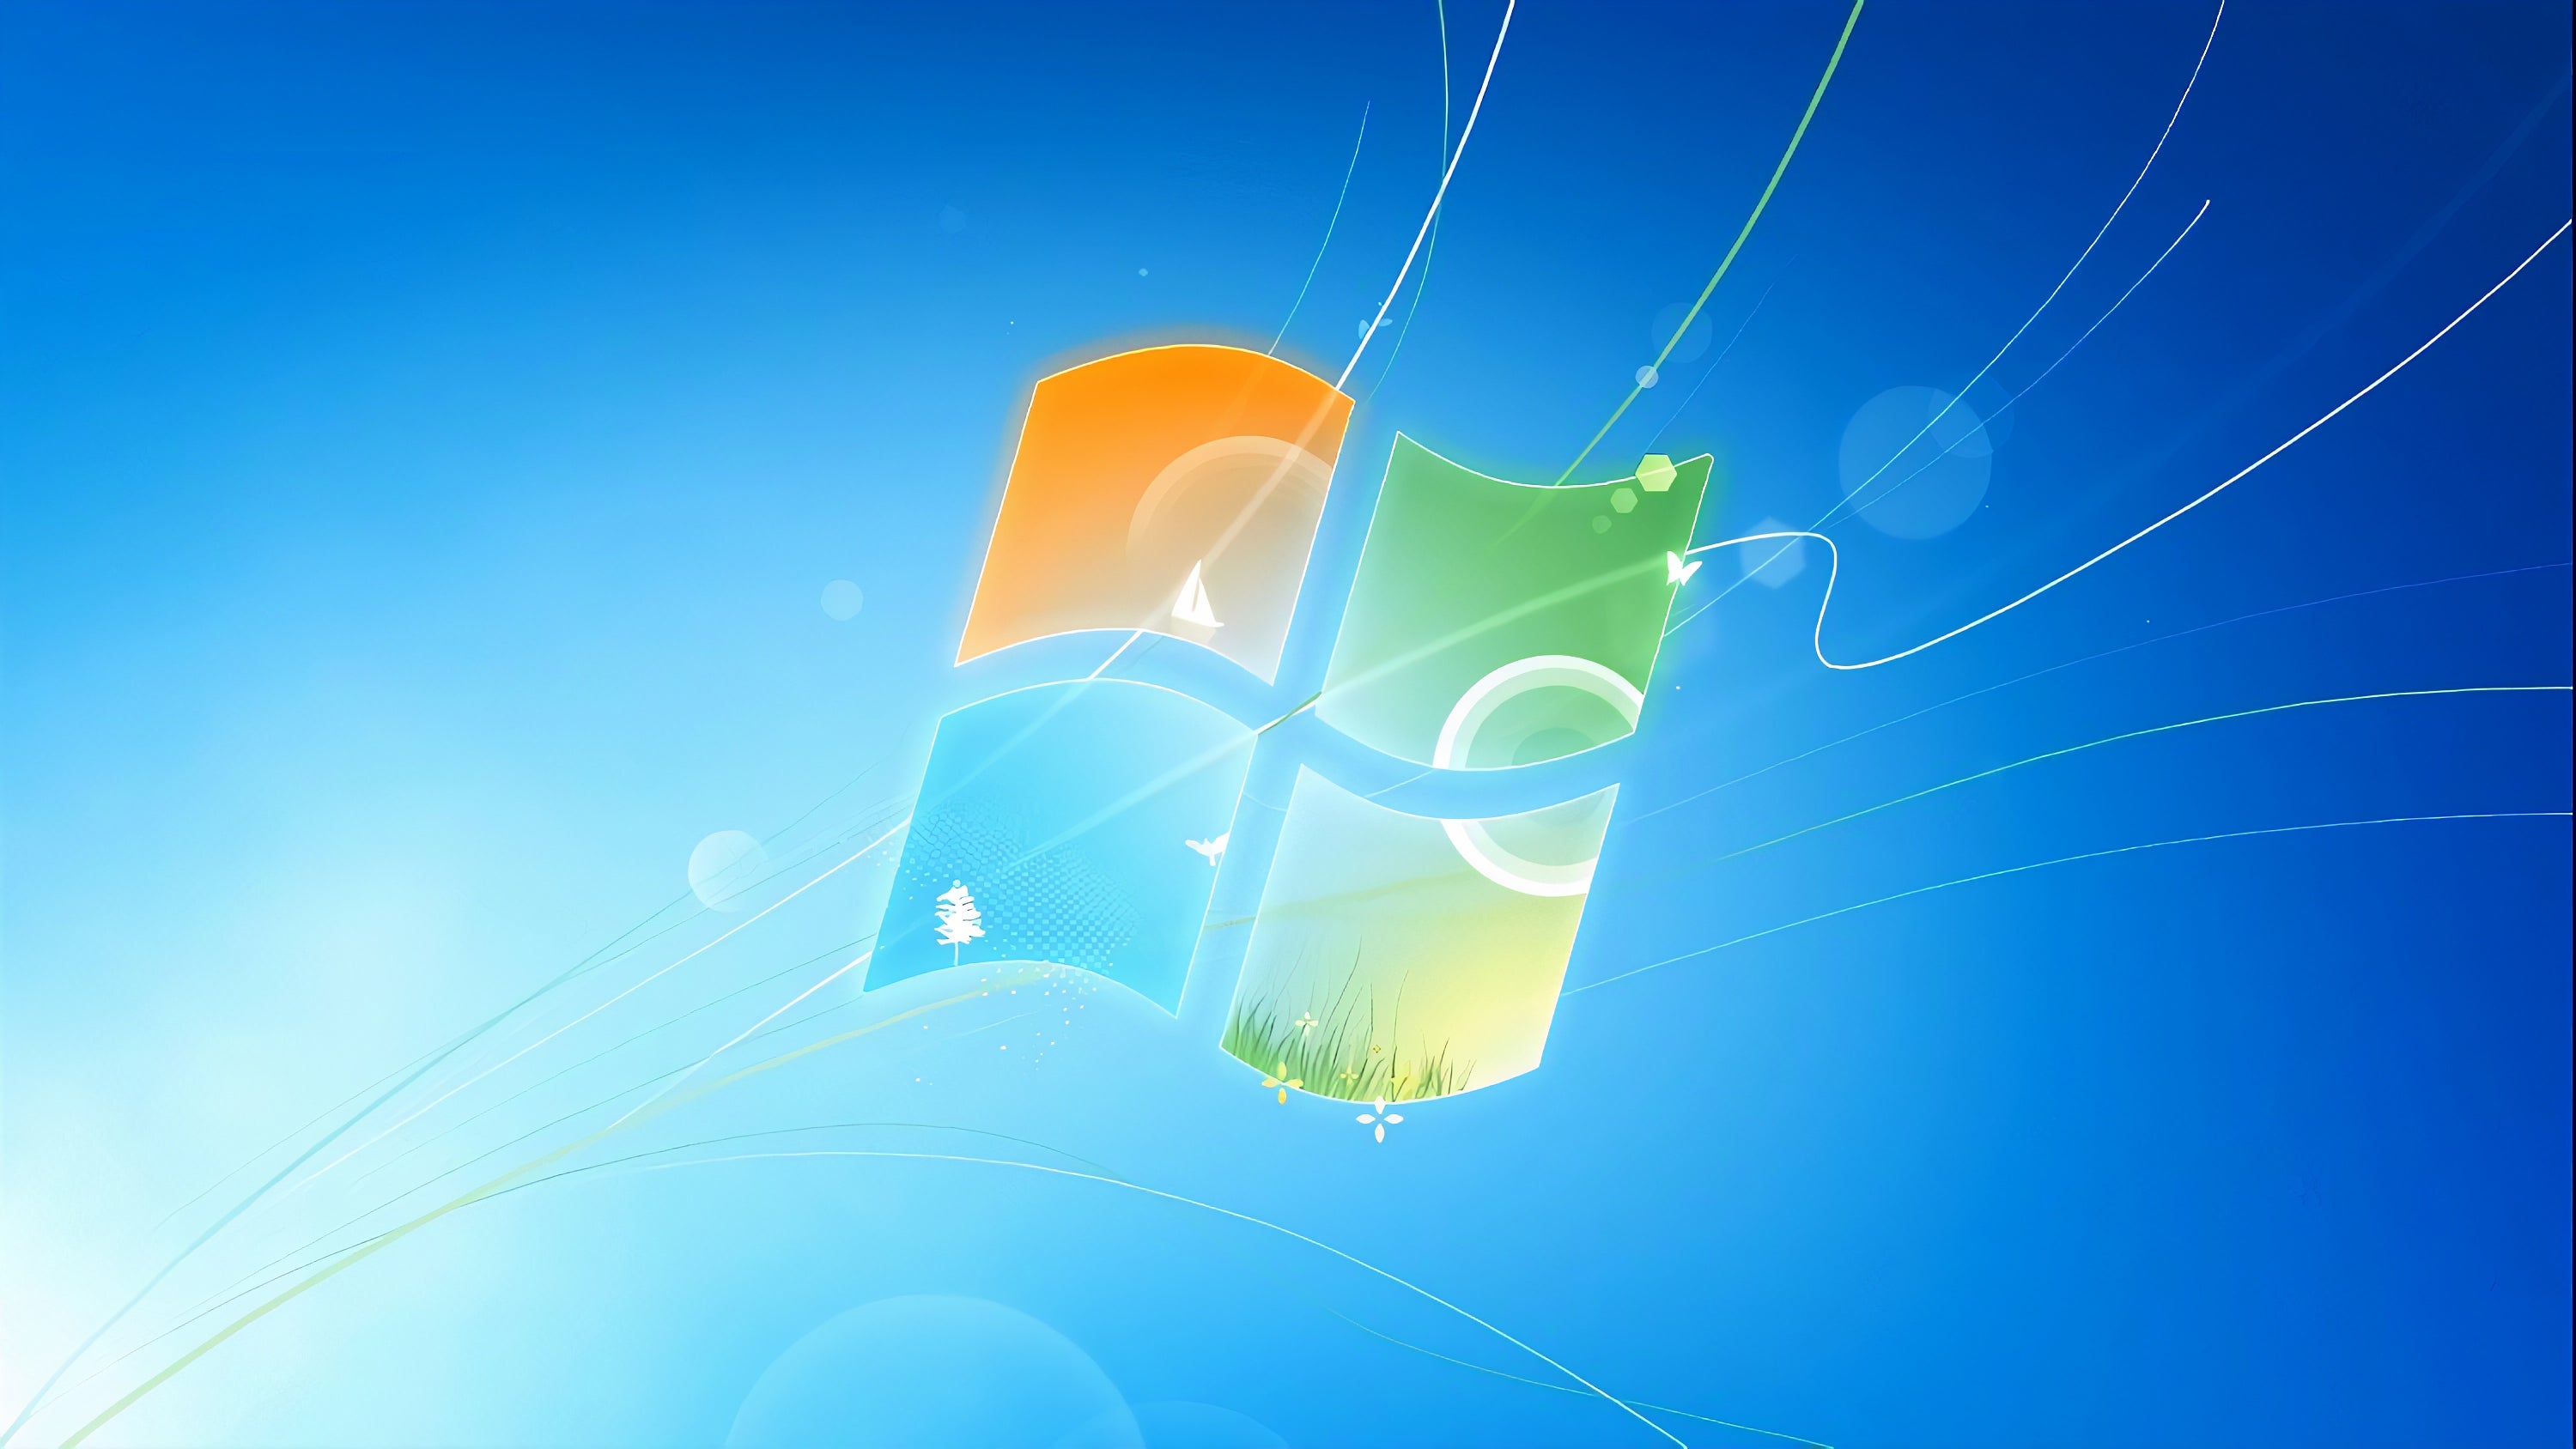 Windows 7 rejected artwork (UPSCALED) 3000×1688